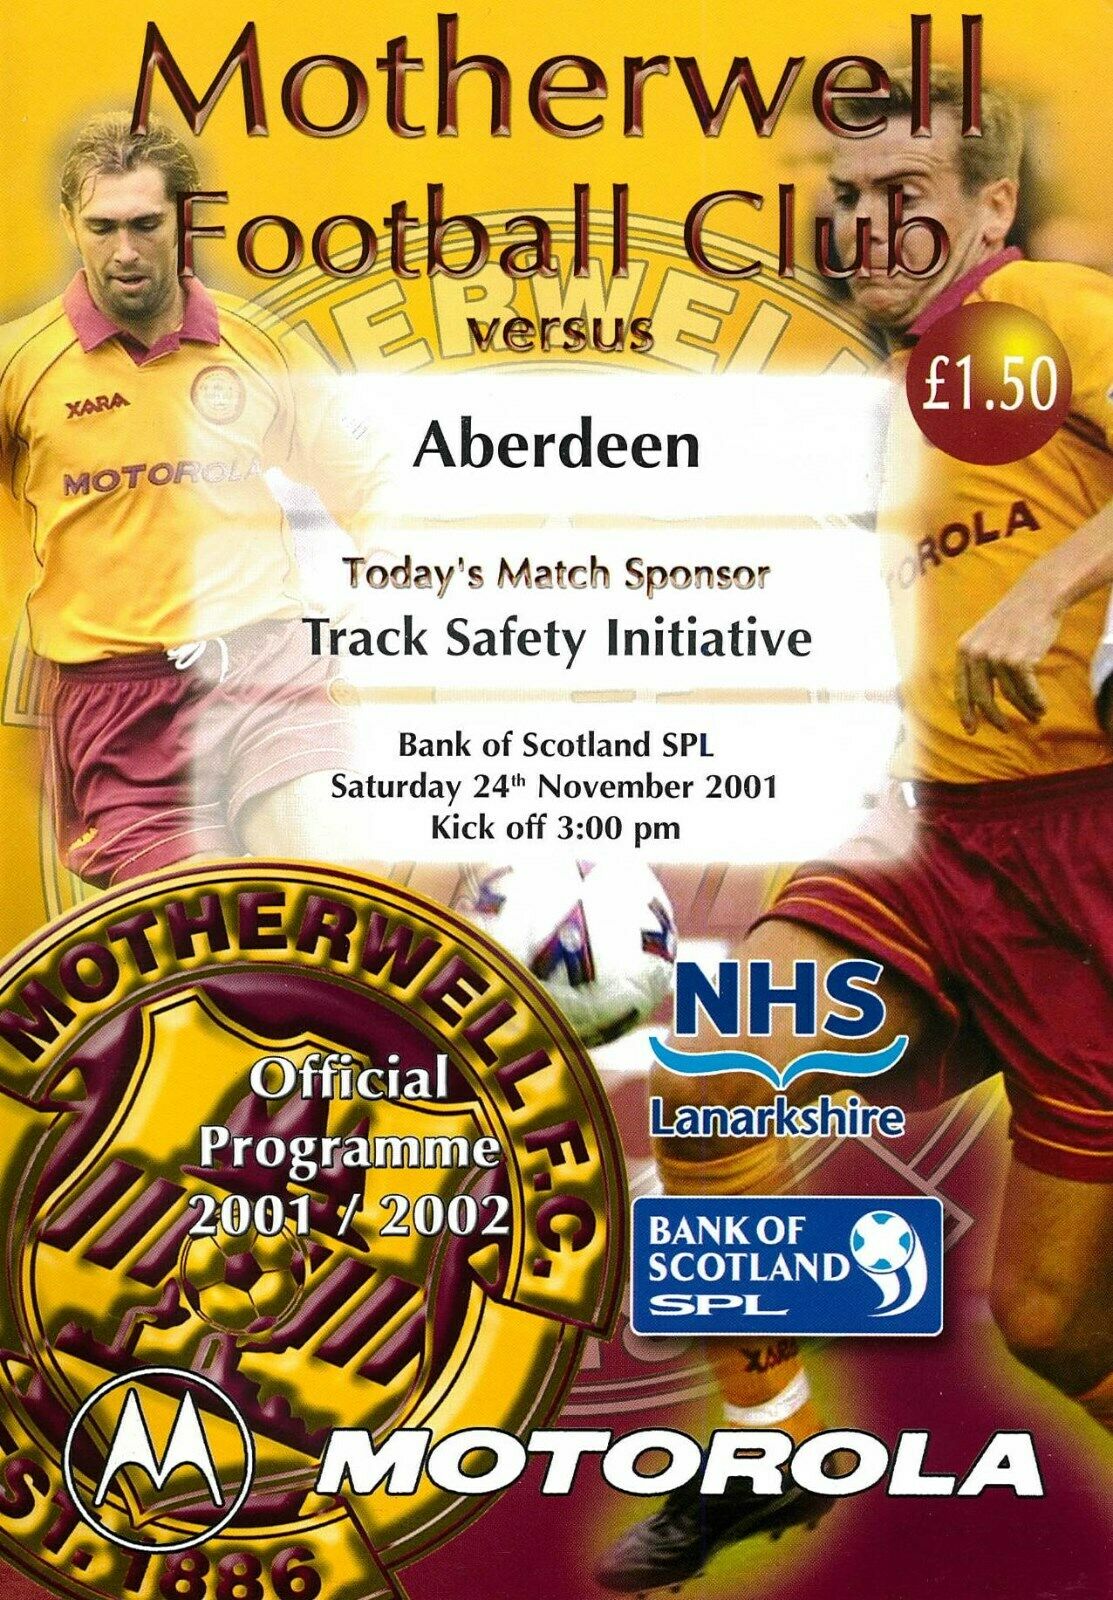 versus Aberdeen Programme Cover